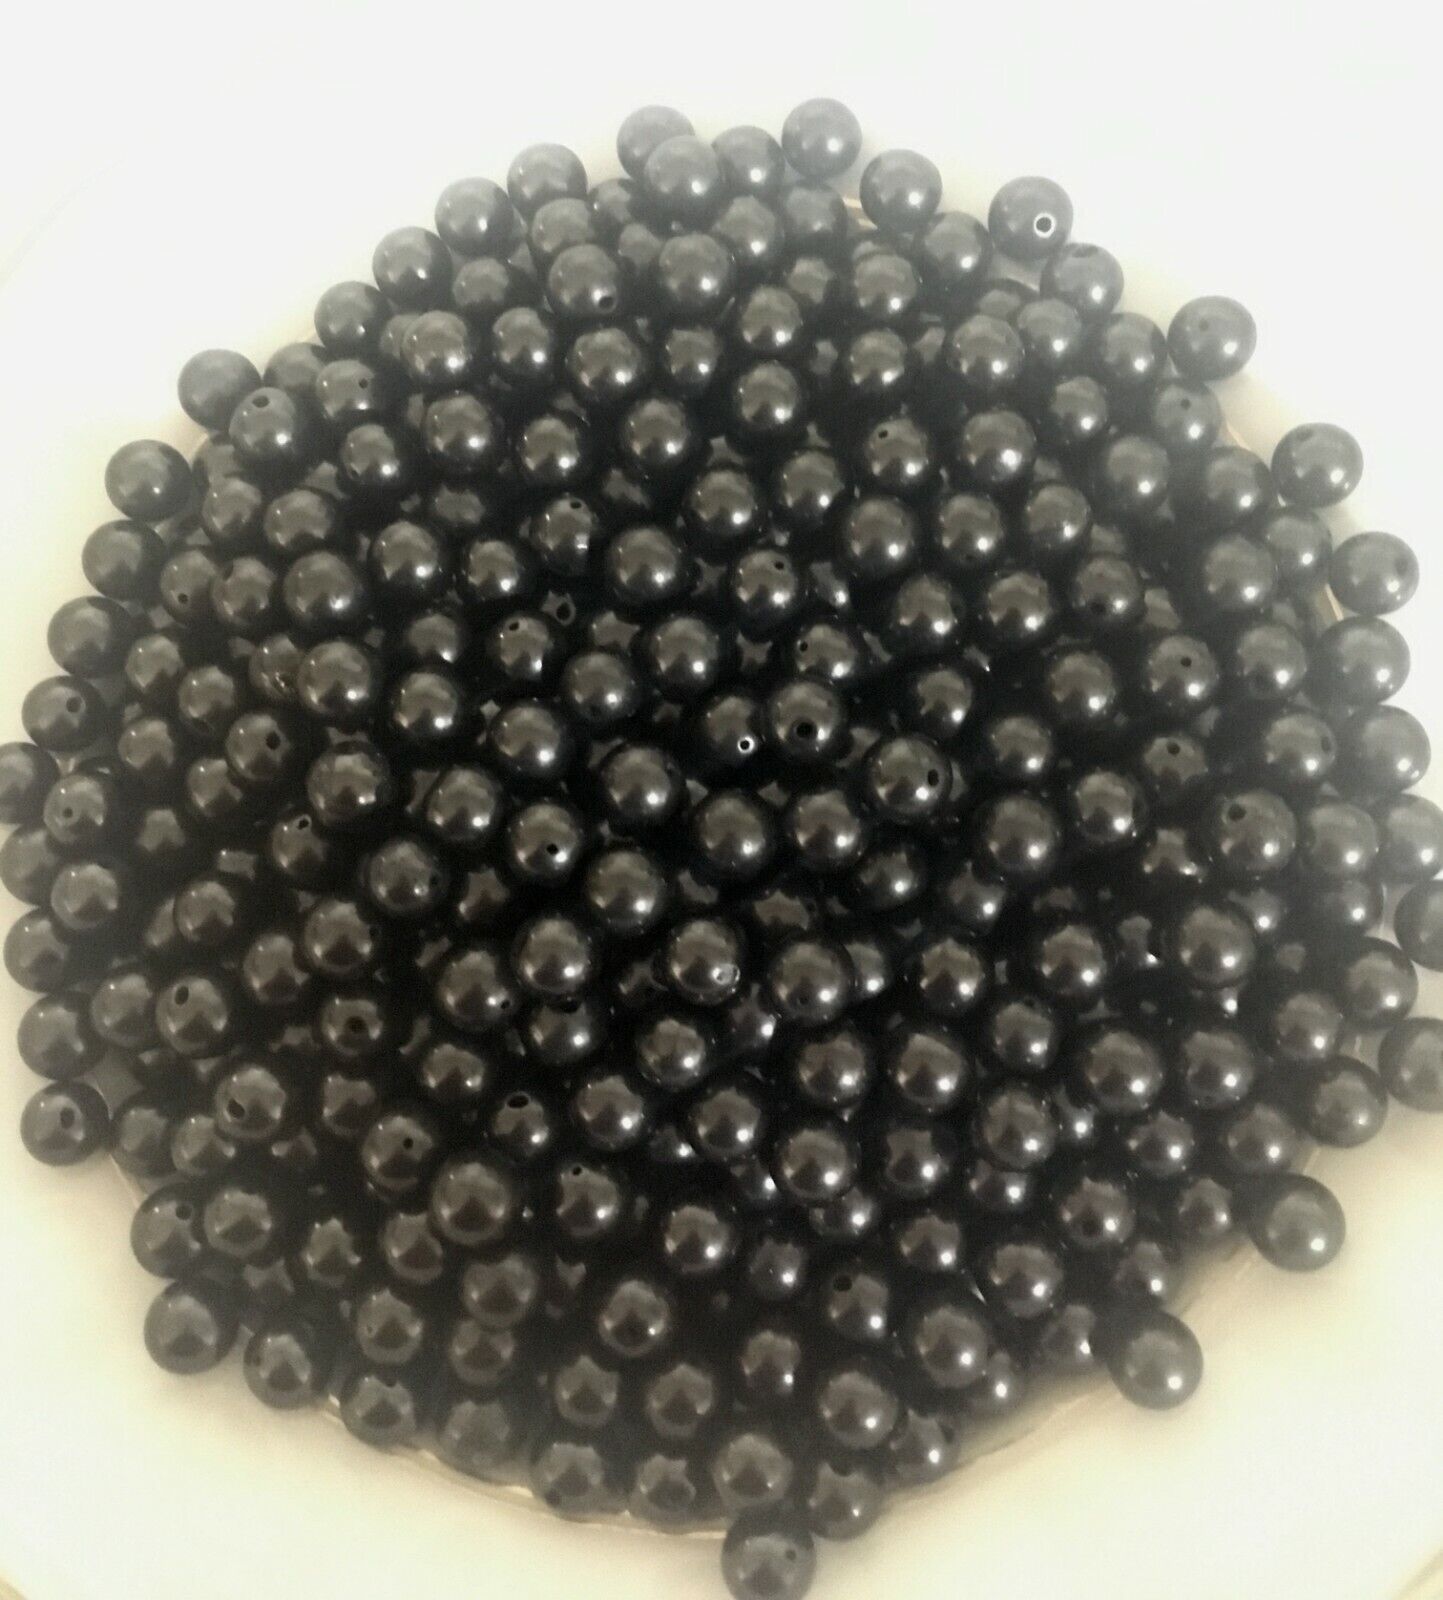 250 pcs SHUNGITE Stone 8 mm Polished Round Beads From Russia - Bulk Loose Beads